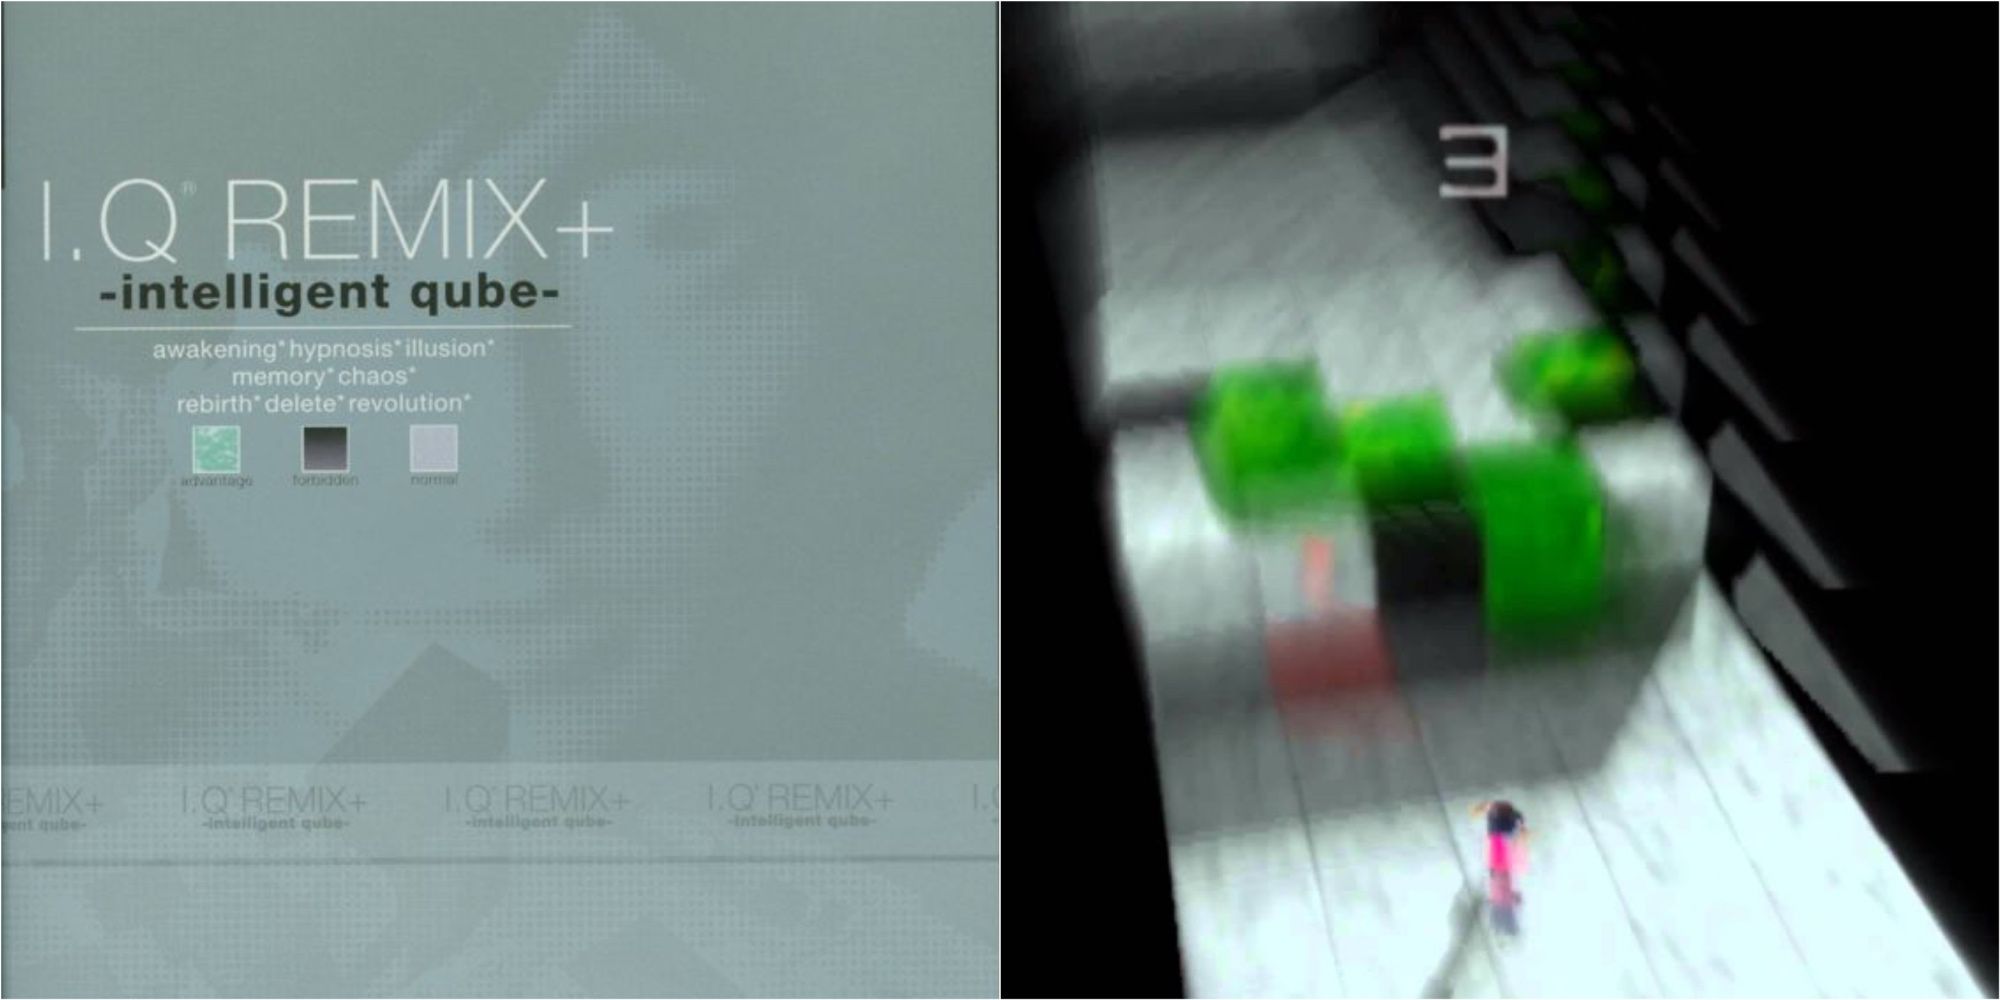 Image showing I.Q Remix.